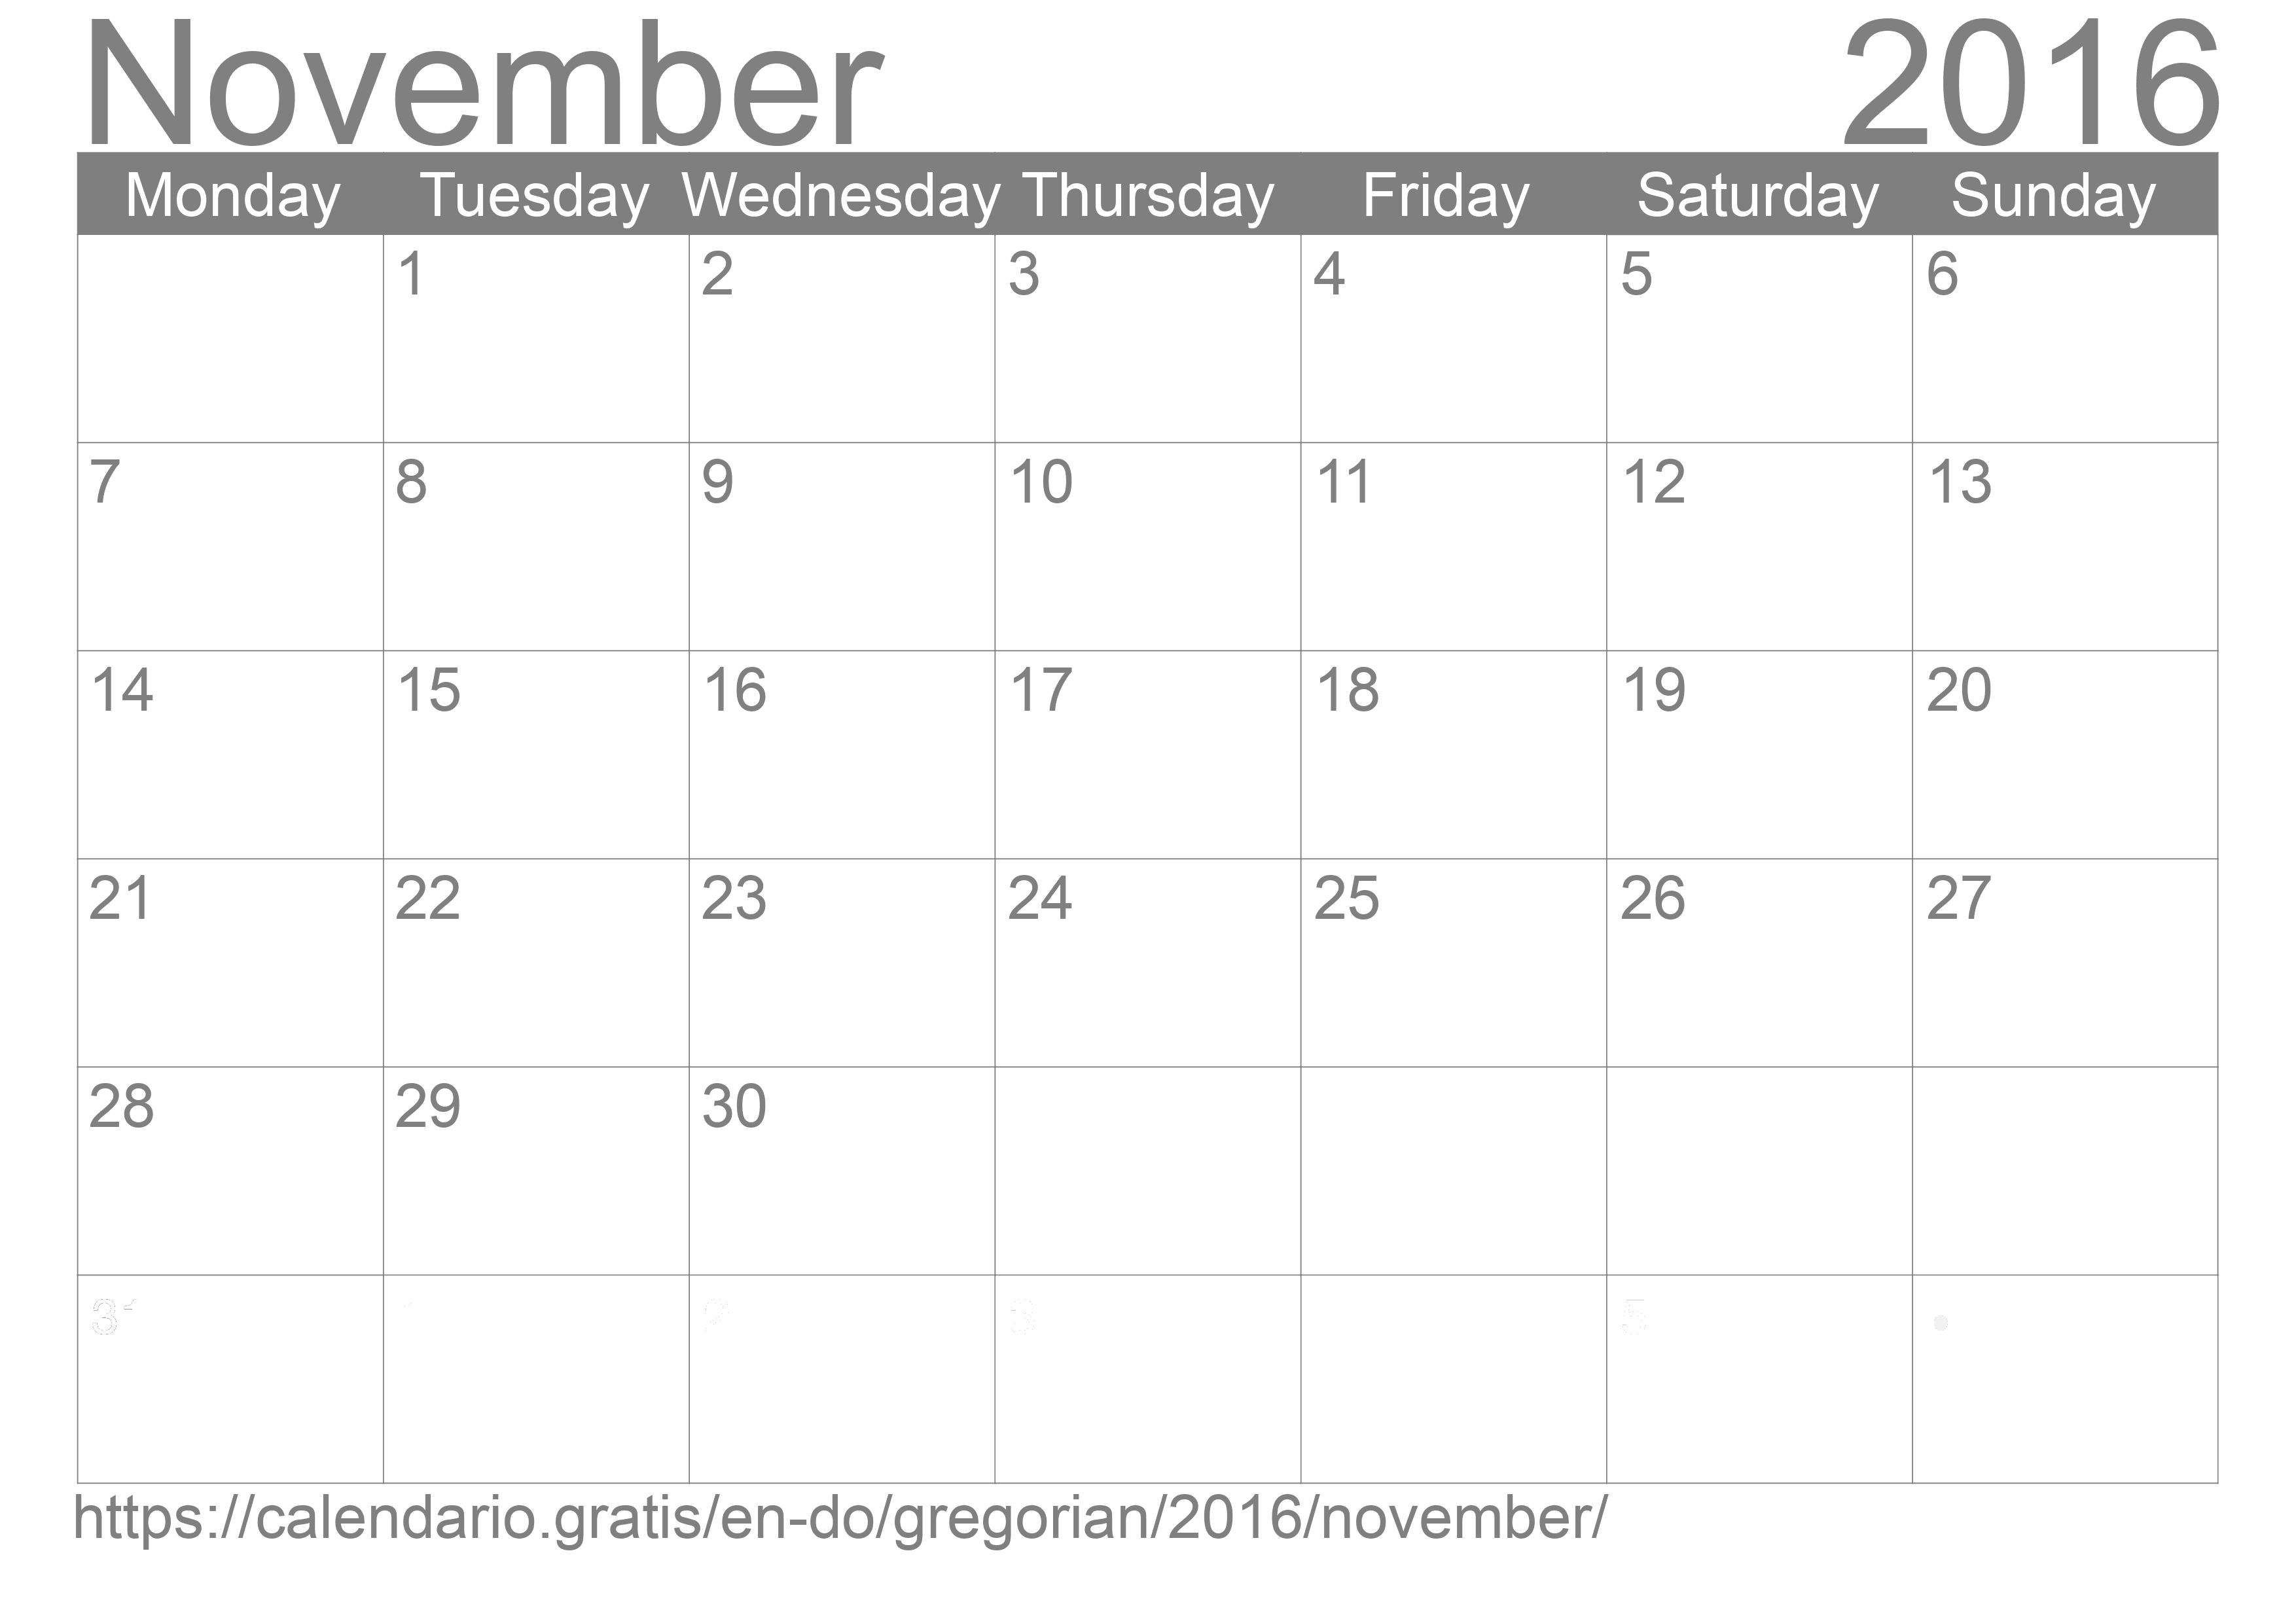 Calendar November 2016 to print